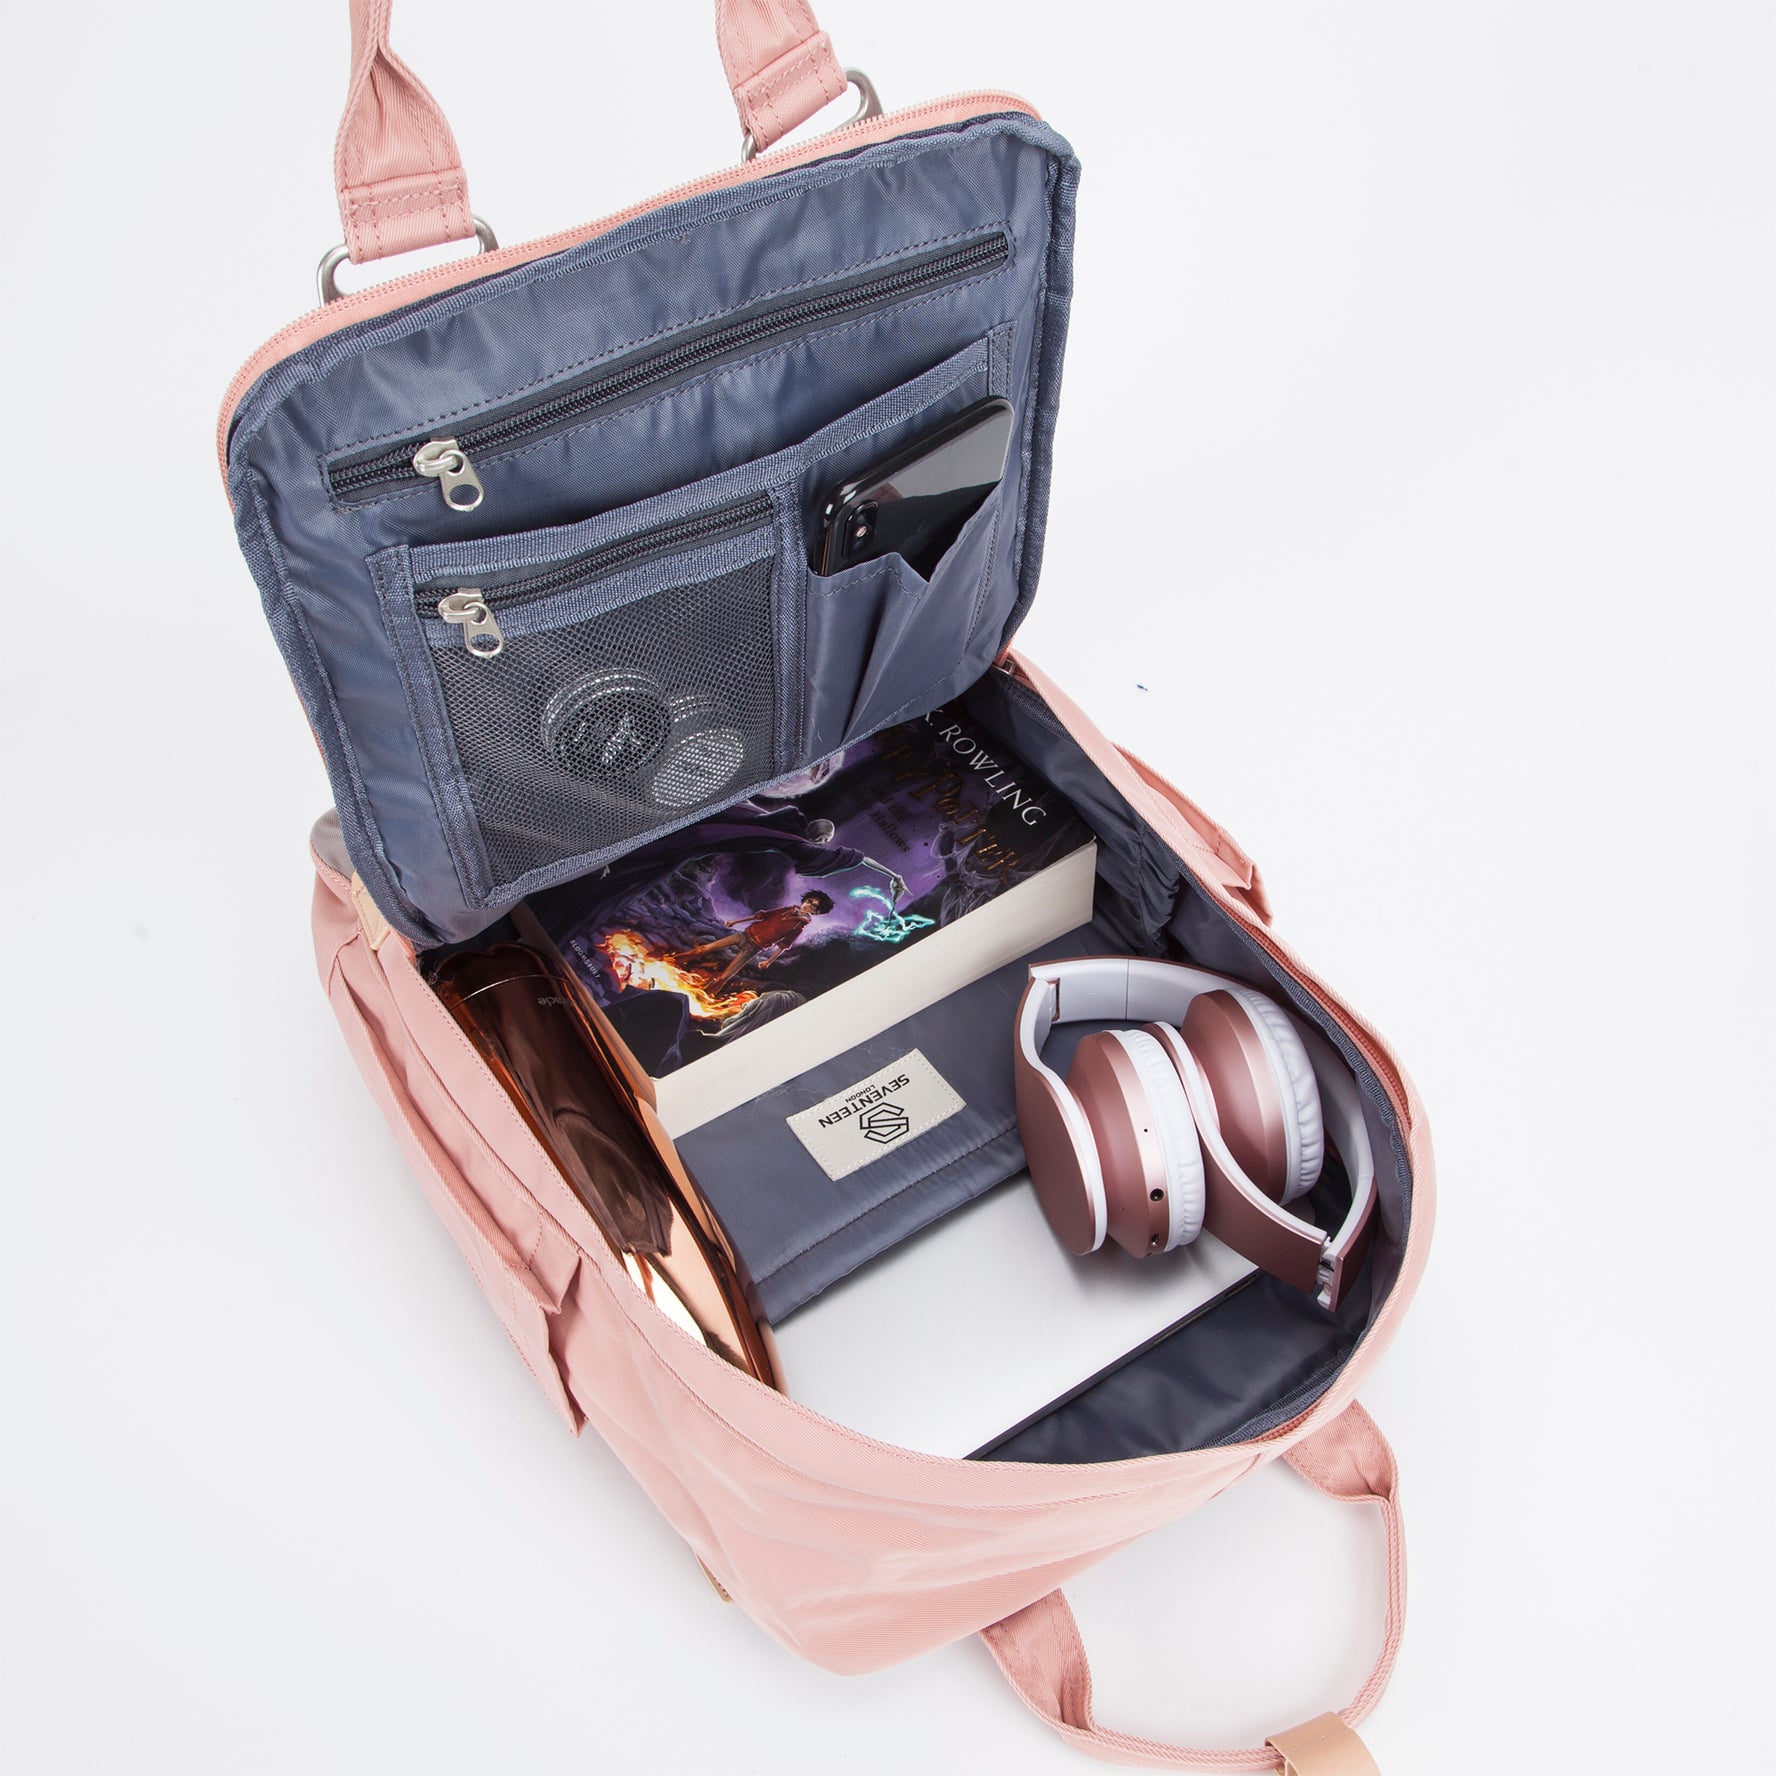 Wimbledon Backpack-Backpack-17 London-Pink/Grey-SchoolBagsAndStuff